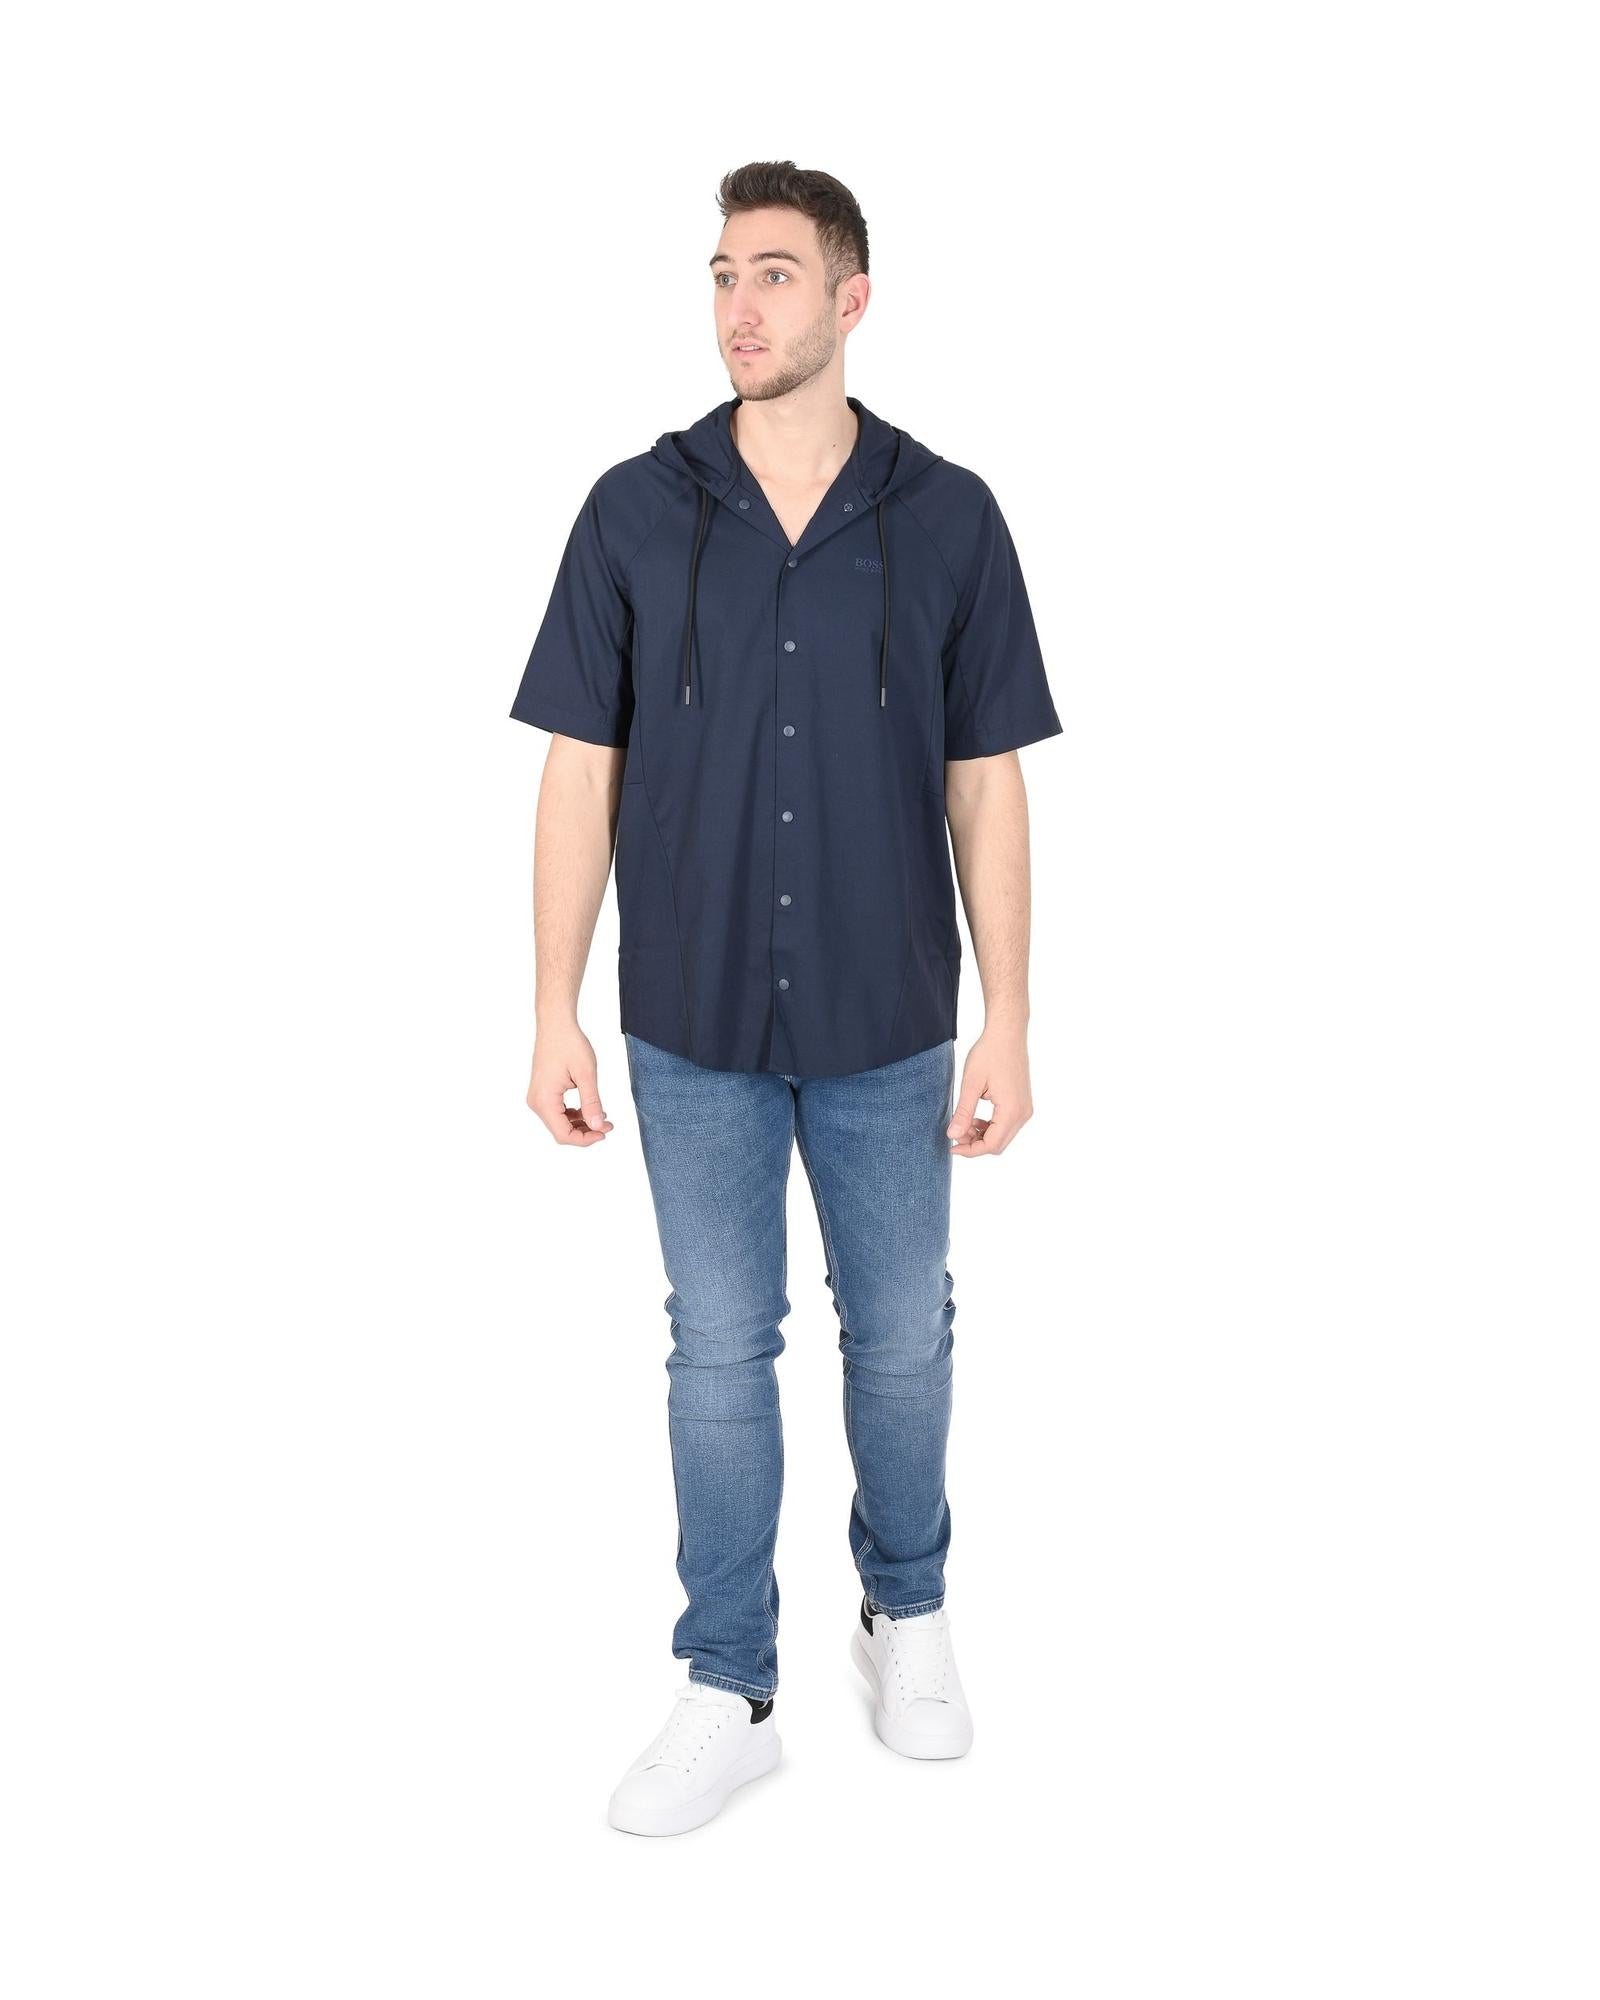 Men's Cotton Blend Navy Shirt in Navy blue - L